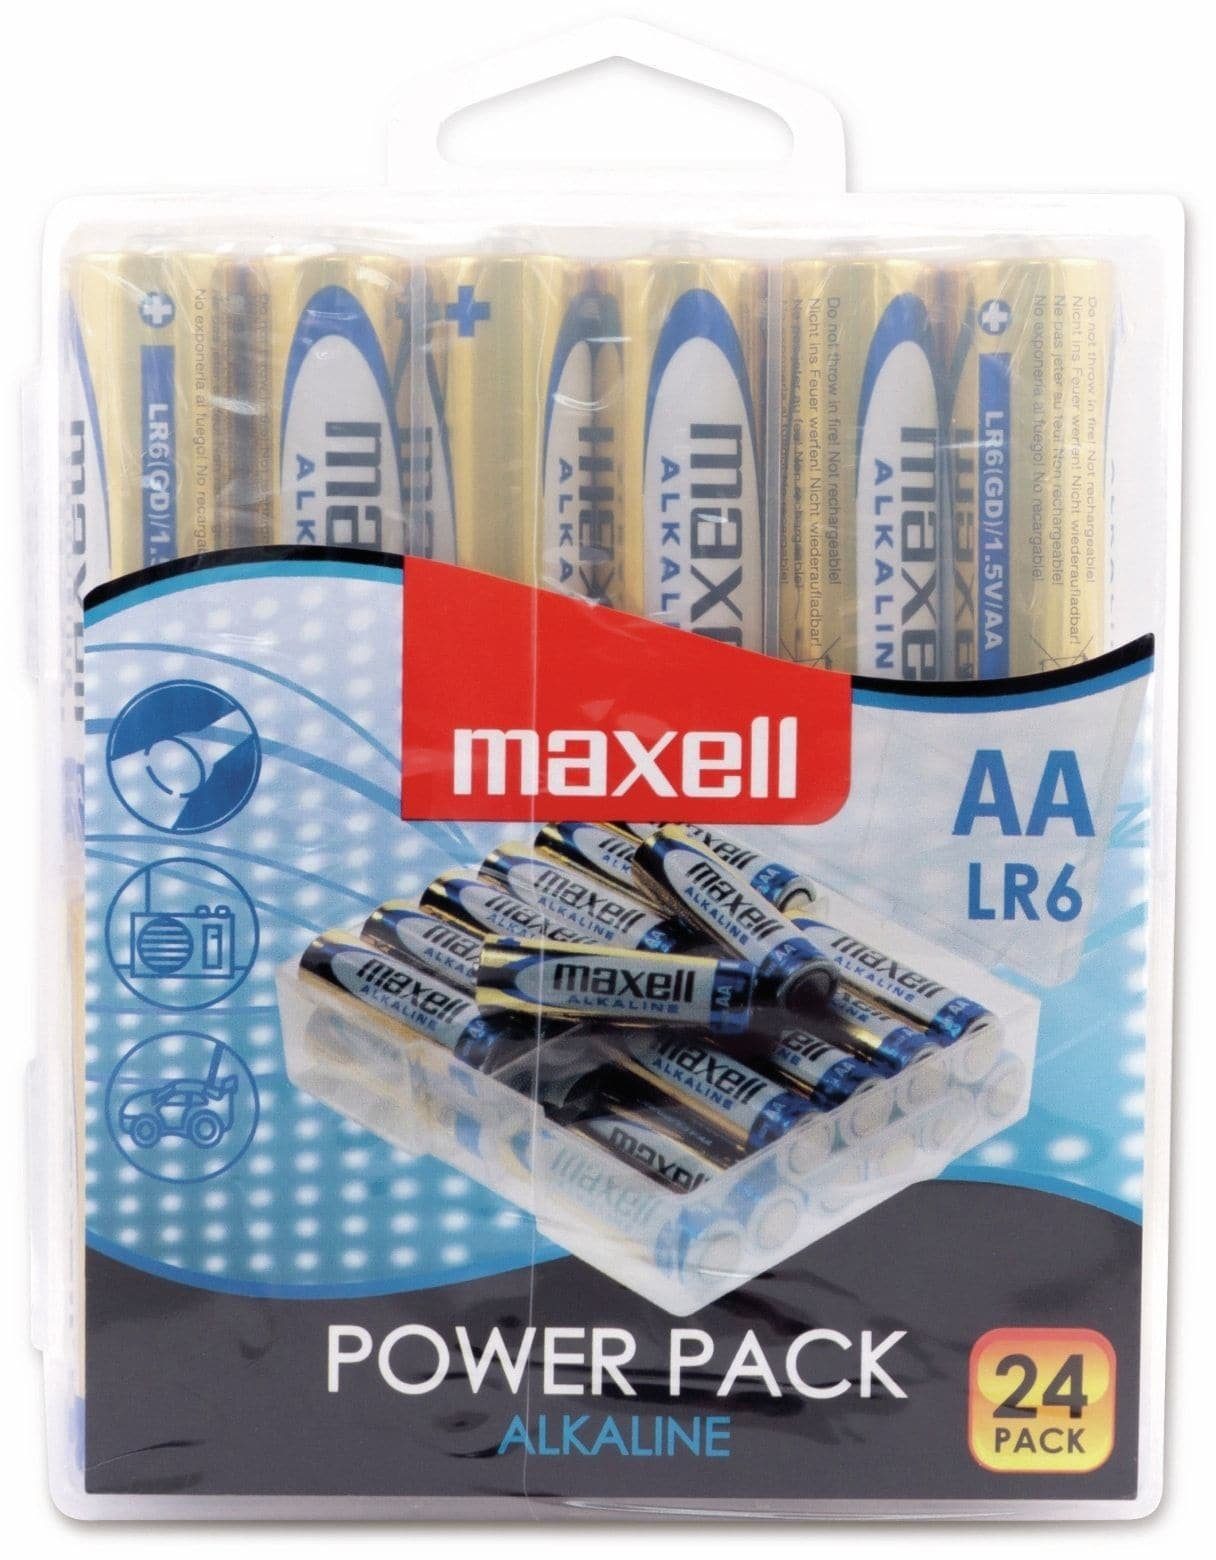 Maxell MAXELL Mignon-Batterie Alkaline, AA, LR6, 24 Stück Batterie